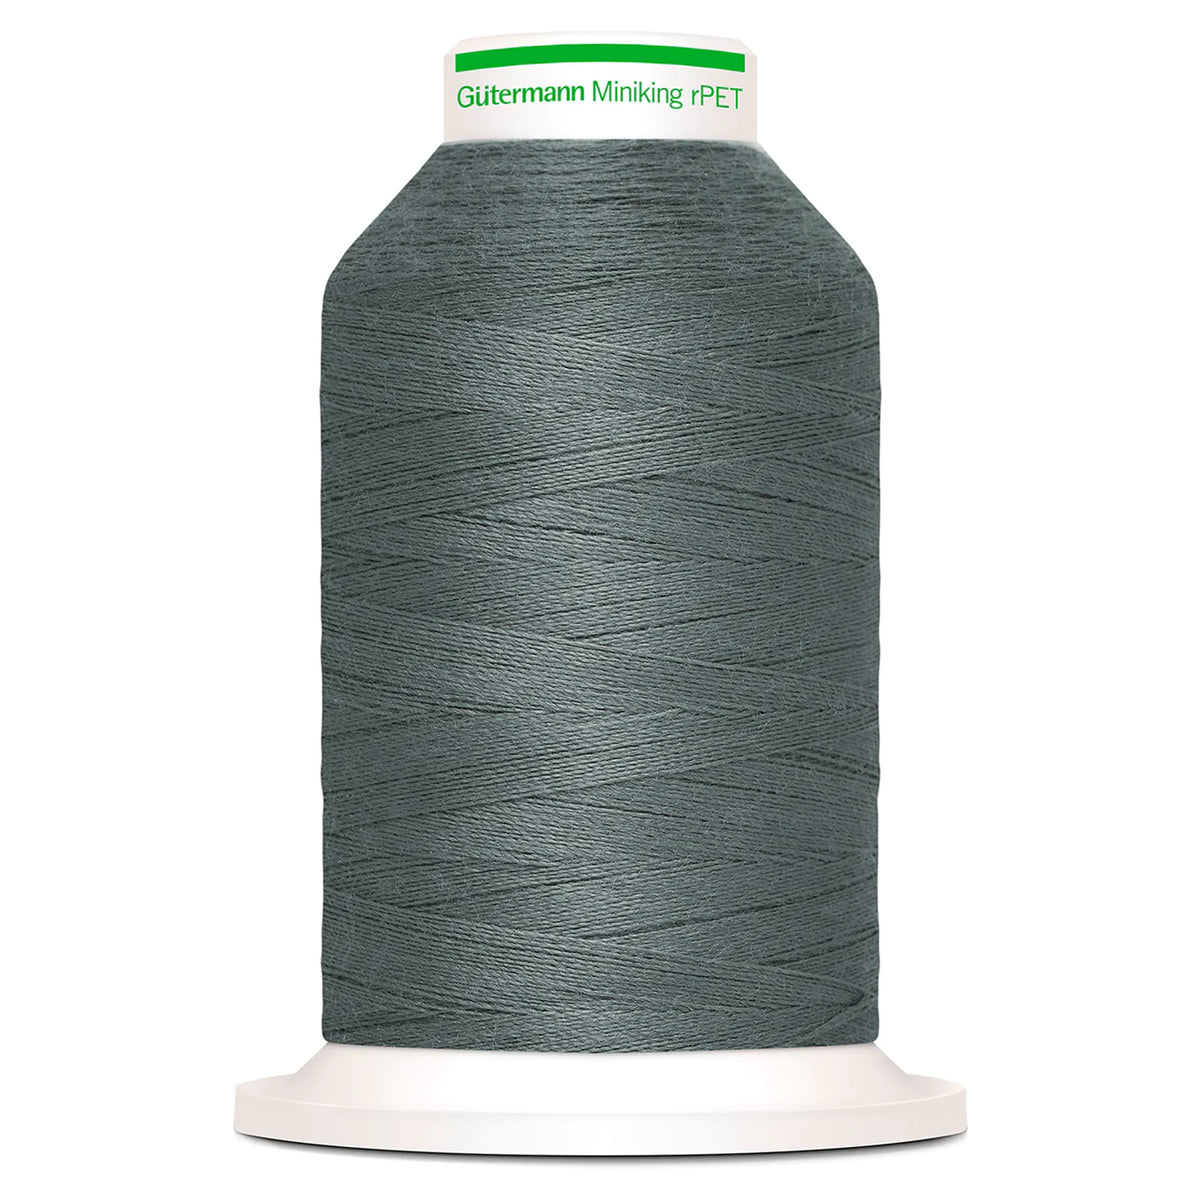 Gütermann rPET Miniking Thread - 1000m Recycled Polyester